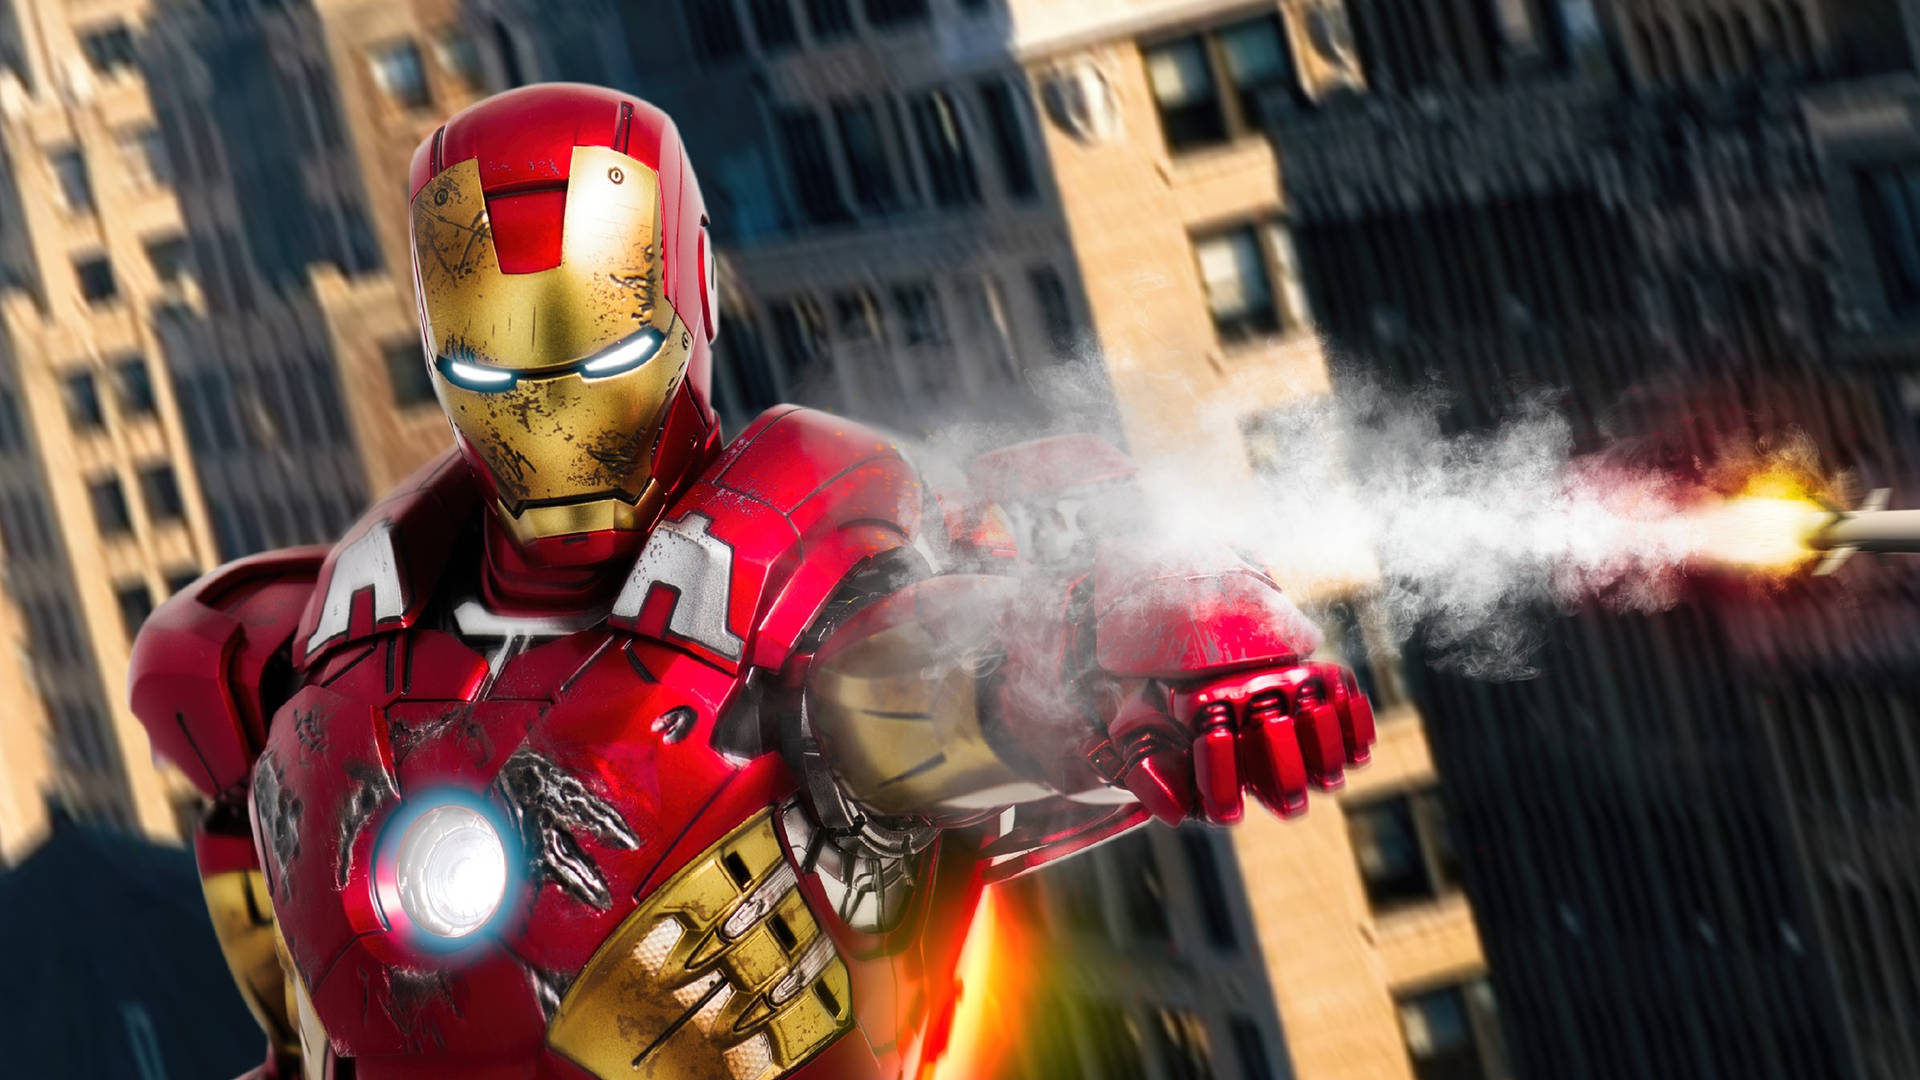 Startetmissile Iron Man Superheld Wallpaper